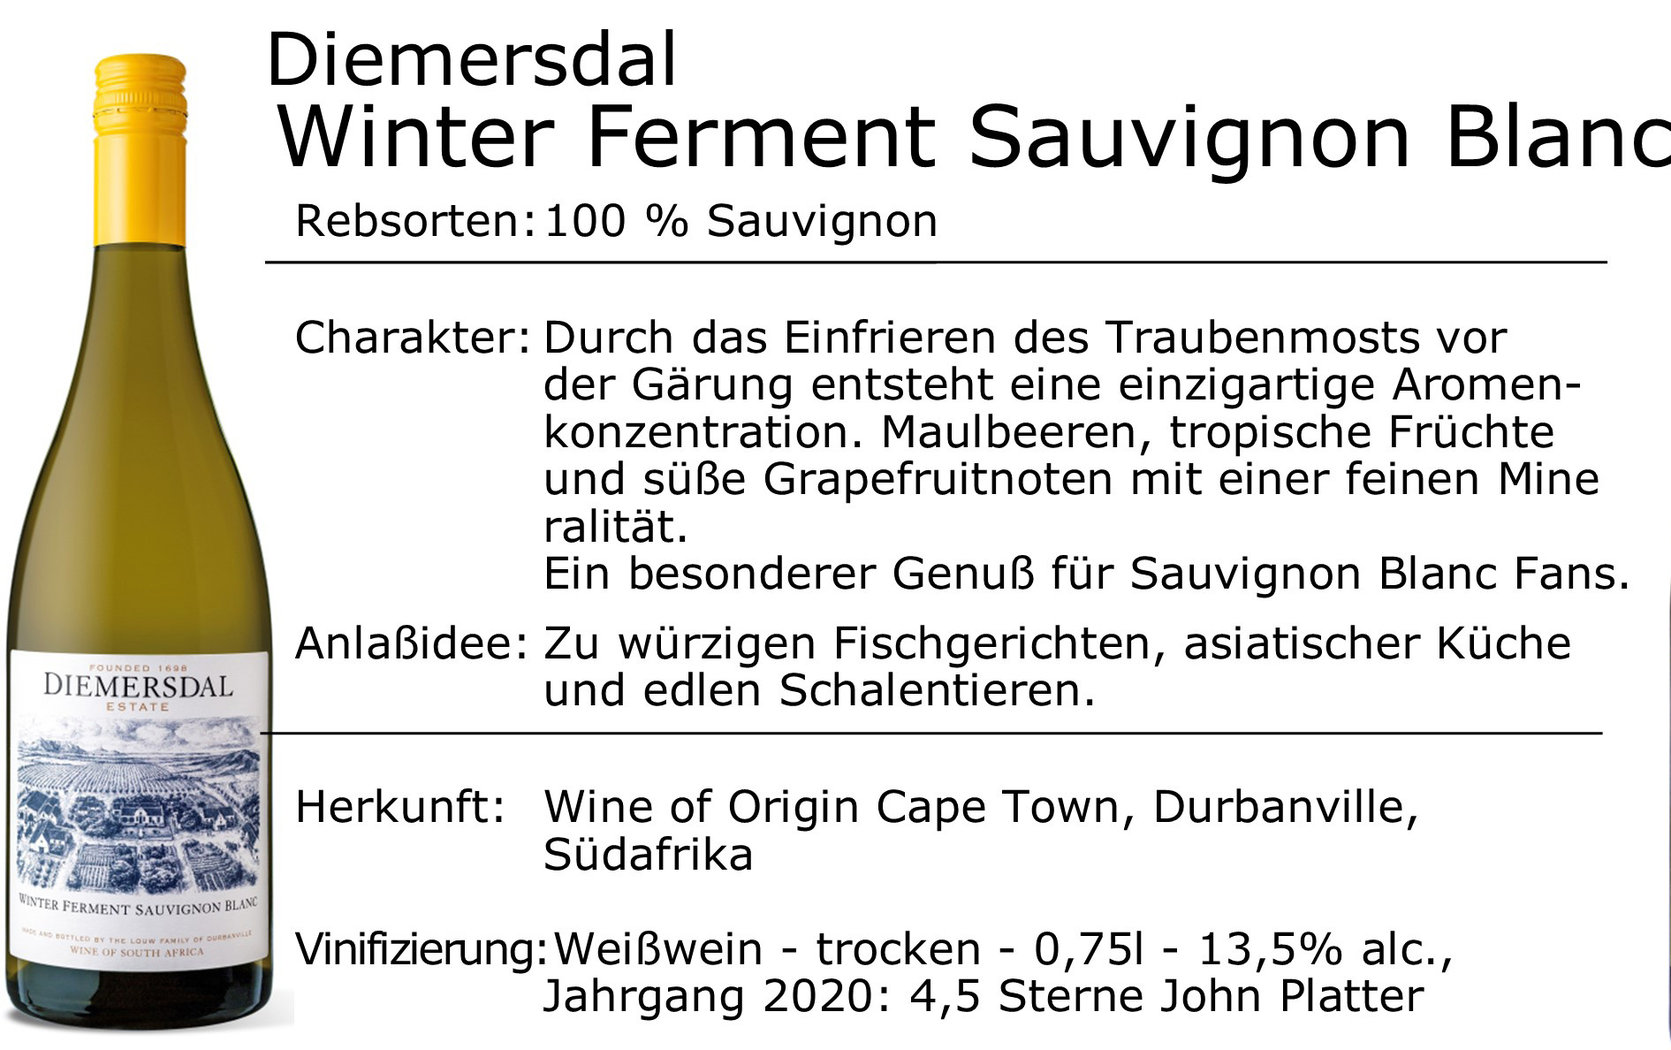 Diemersdal Winter Ferment Sauvignon Blanc 2021